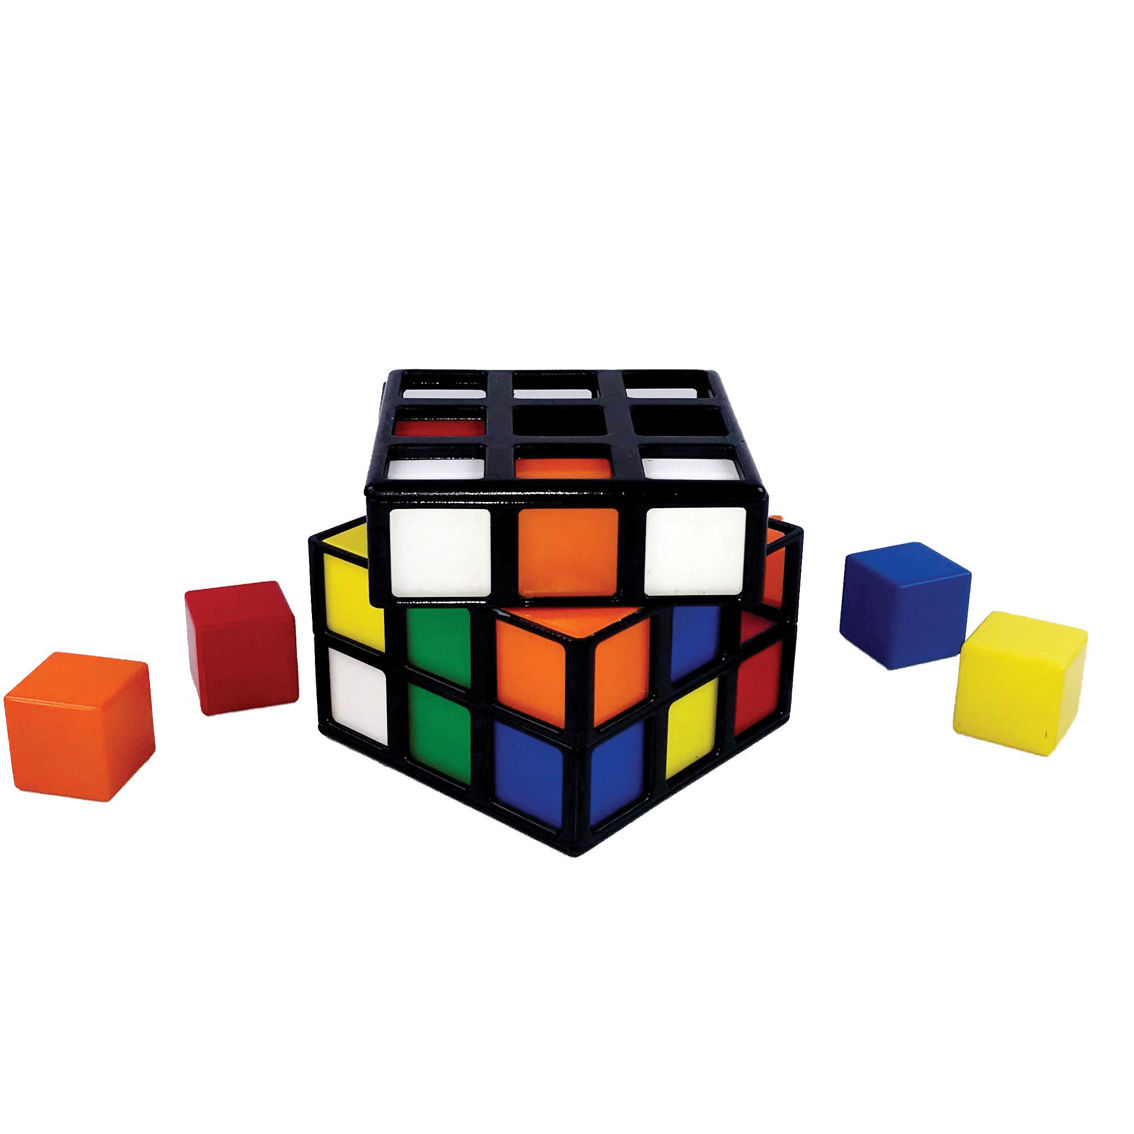 University Games Rubik's Cage - Image 2 of 2